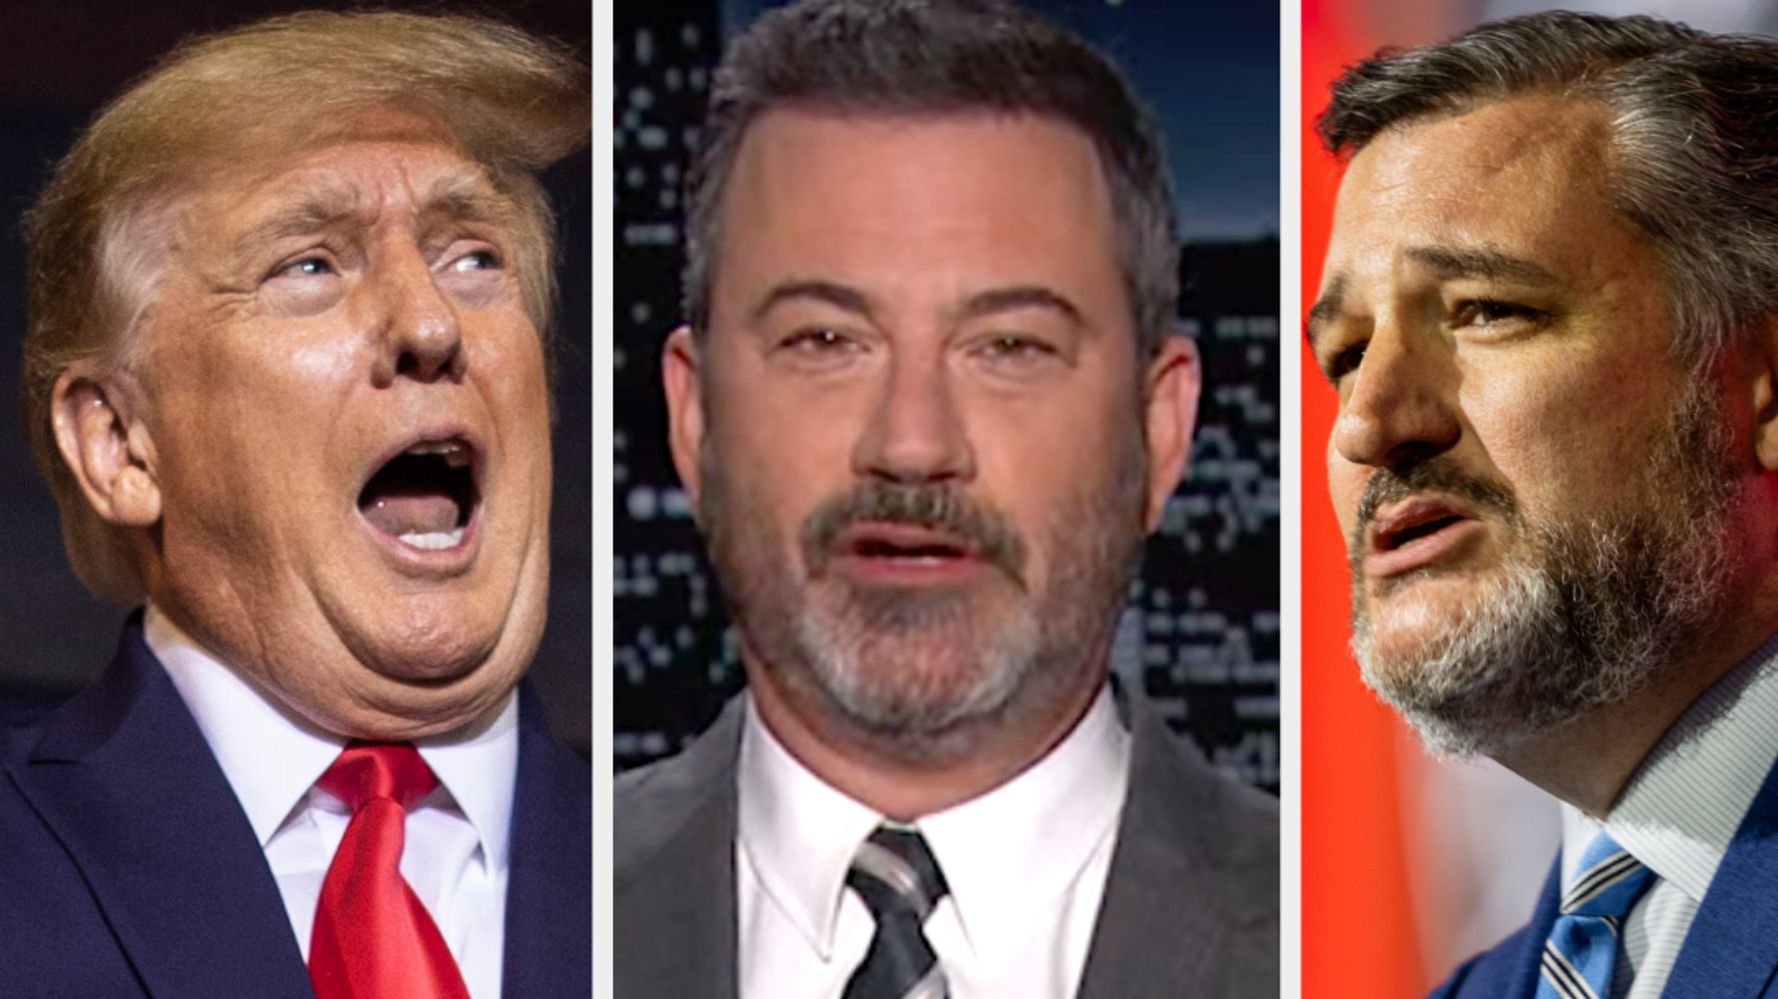 'Spoken Like A Real Knob': Jimmy Kimmel Burns Trump, Ted Cruz In Scorching Monologue